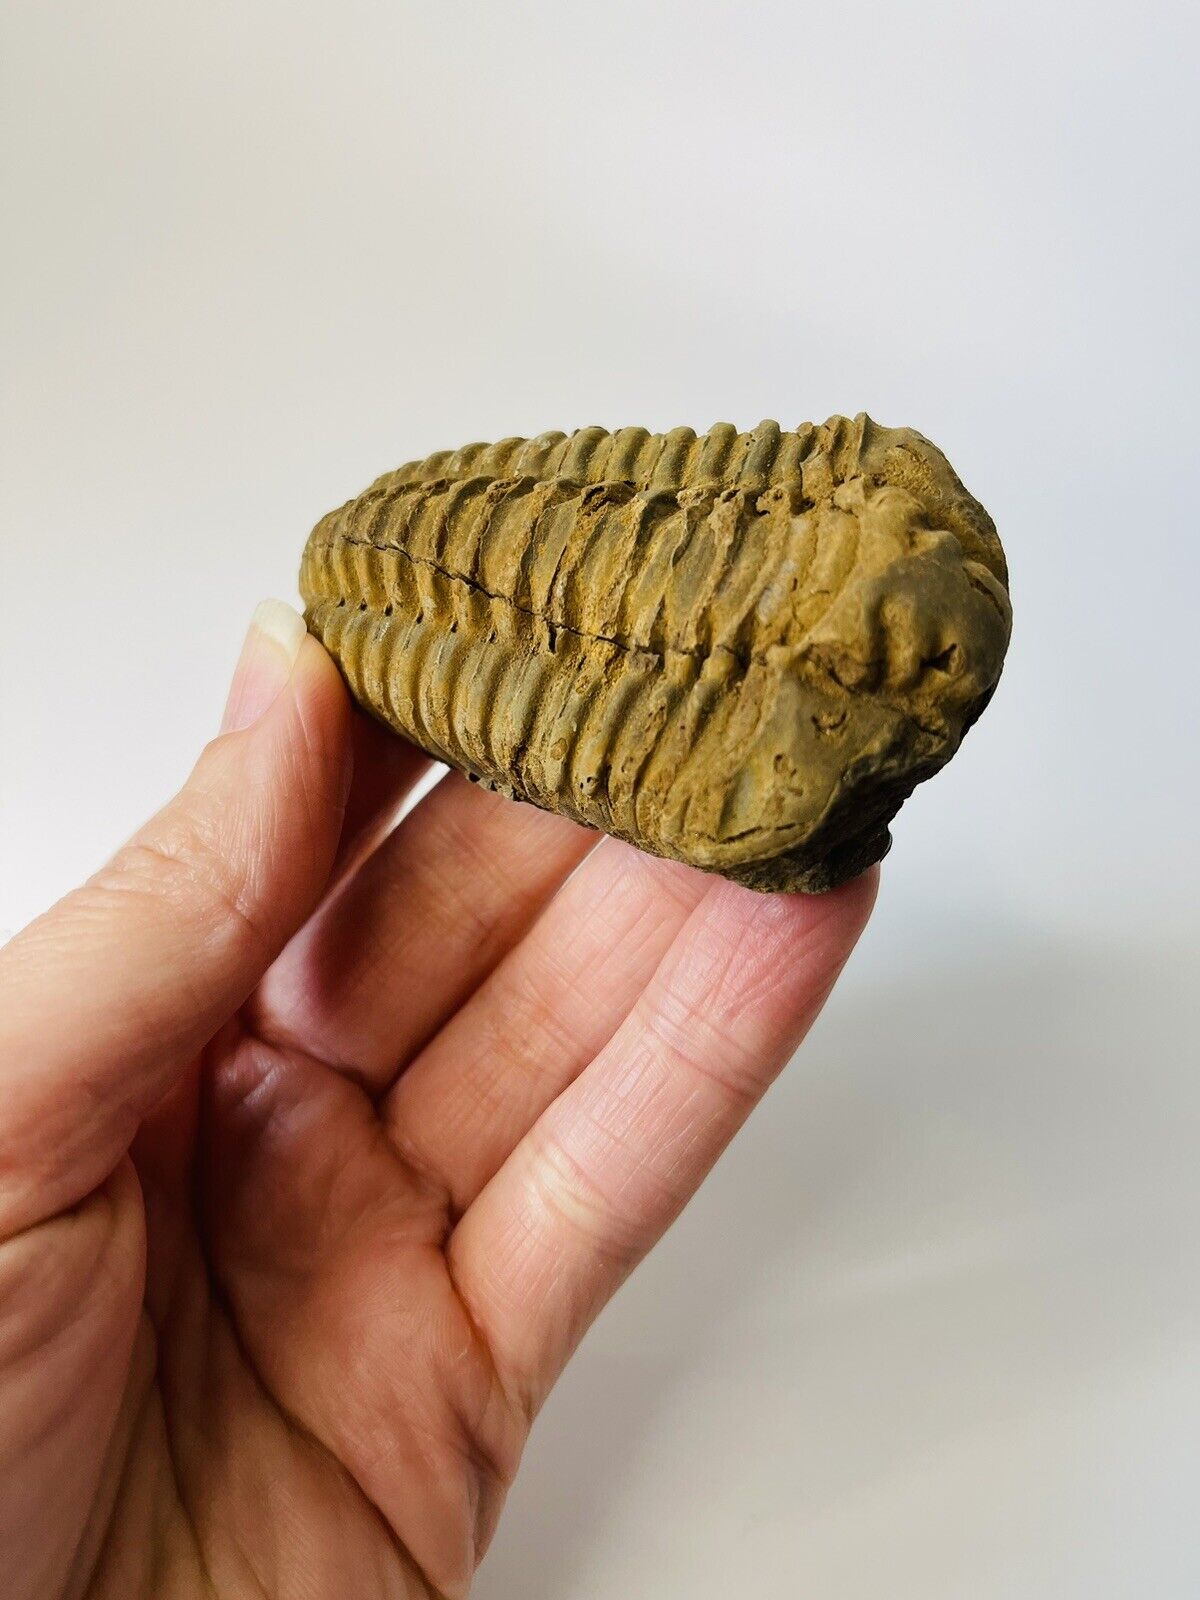 PRISTINE Trilobite Calymene Clavicula Wyoming Fossil Beautiful Condition Collect